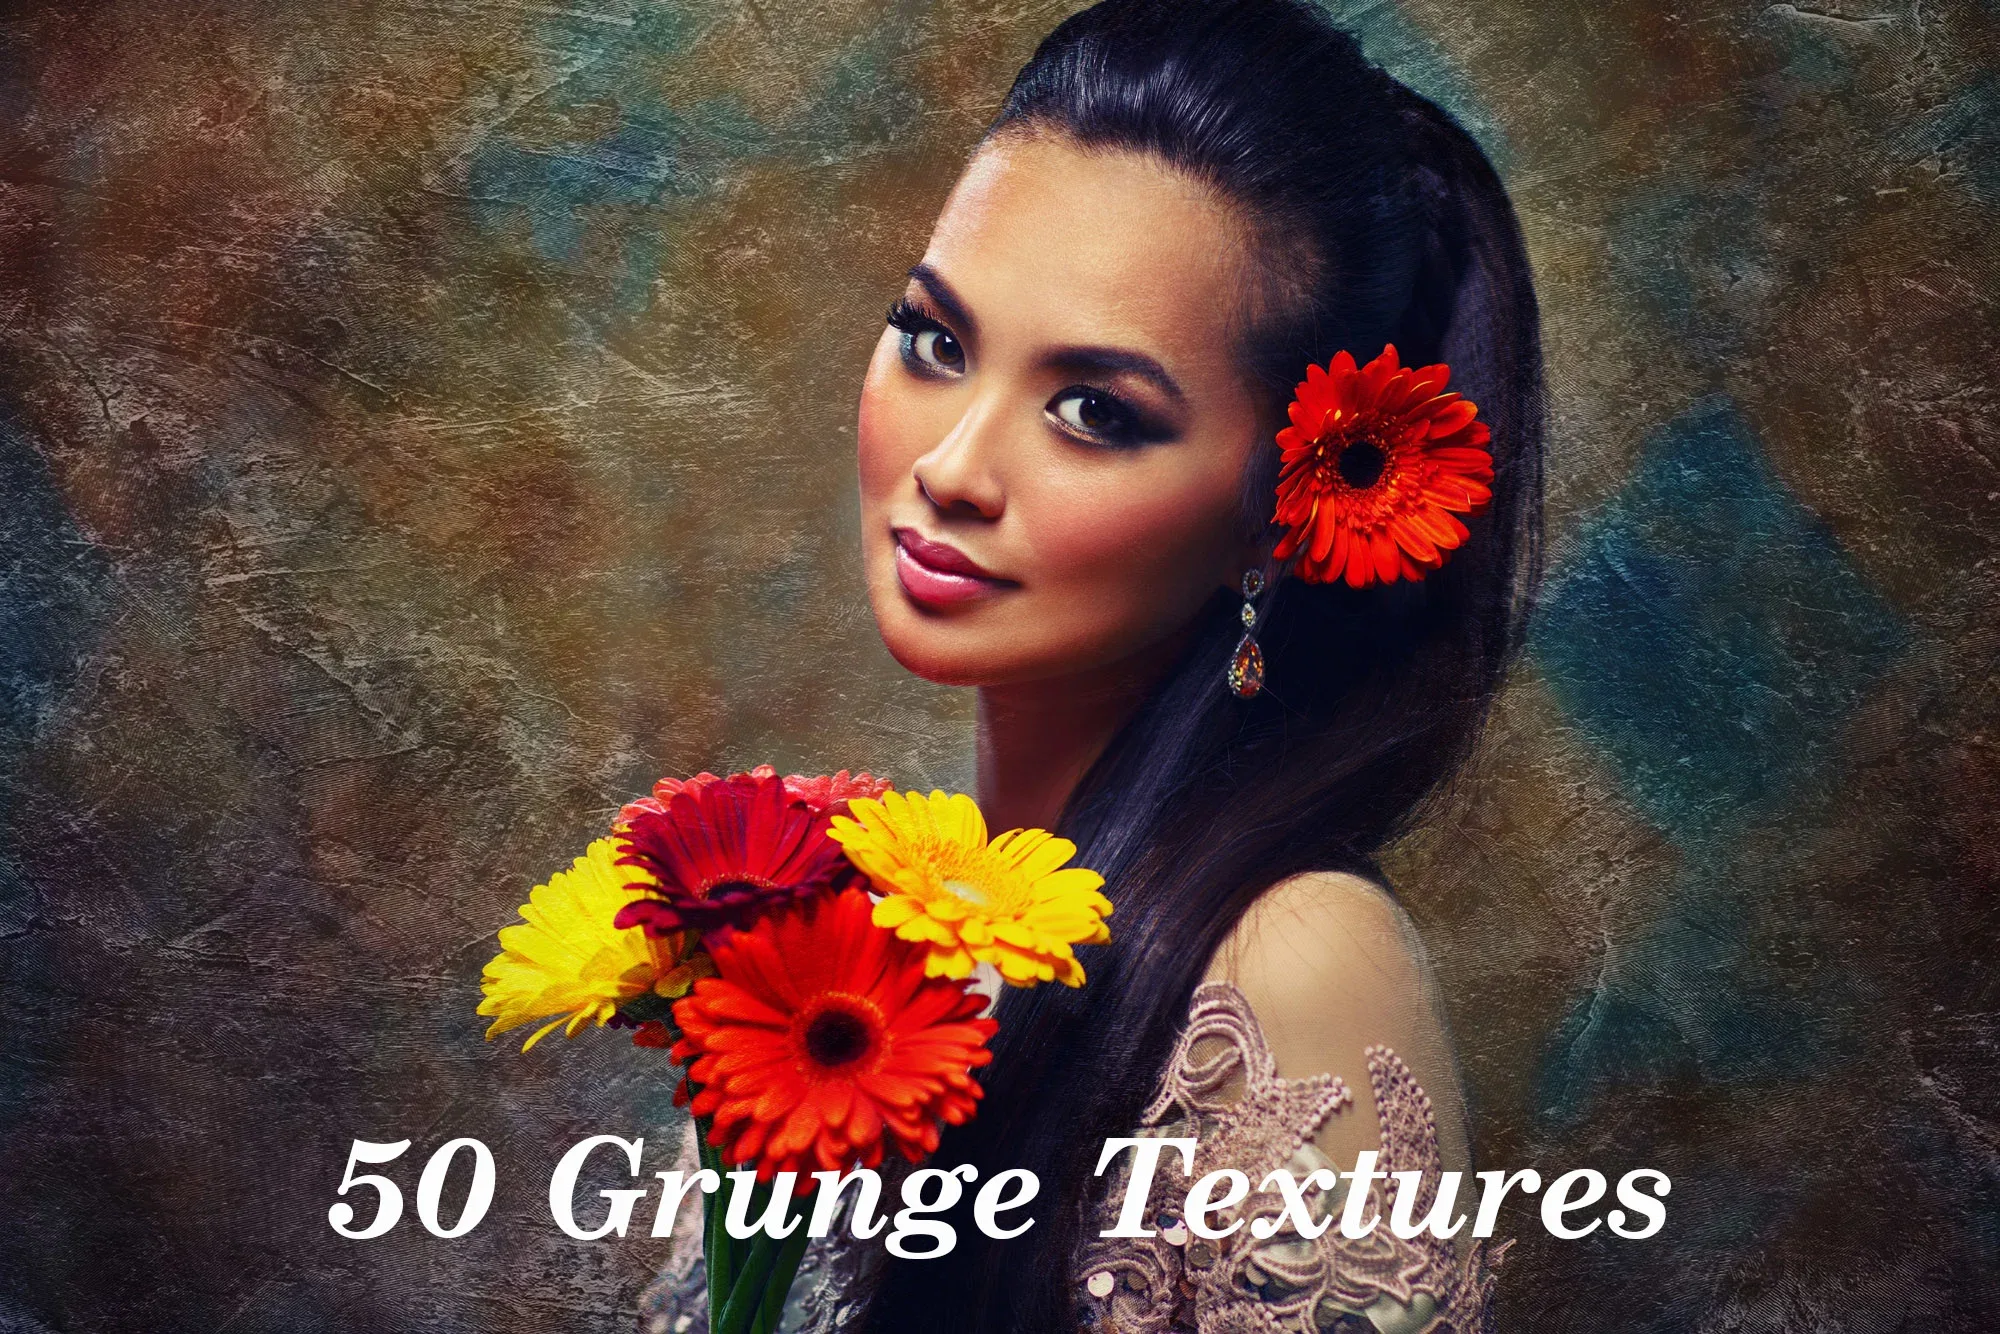 50 Grunge Textures, Grunge Digital Paper Backgrounds, Grunge Surface, Vintage Distressed Dark Textures, Gritty Textures, Portrait Overlays